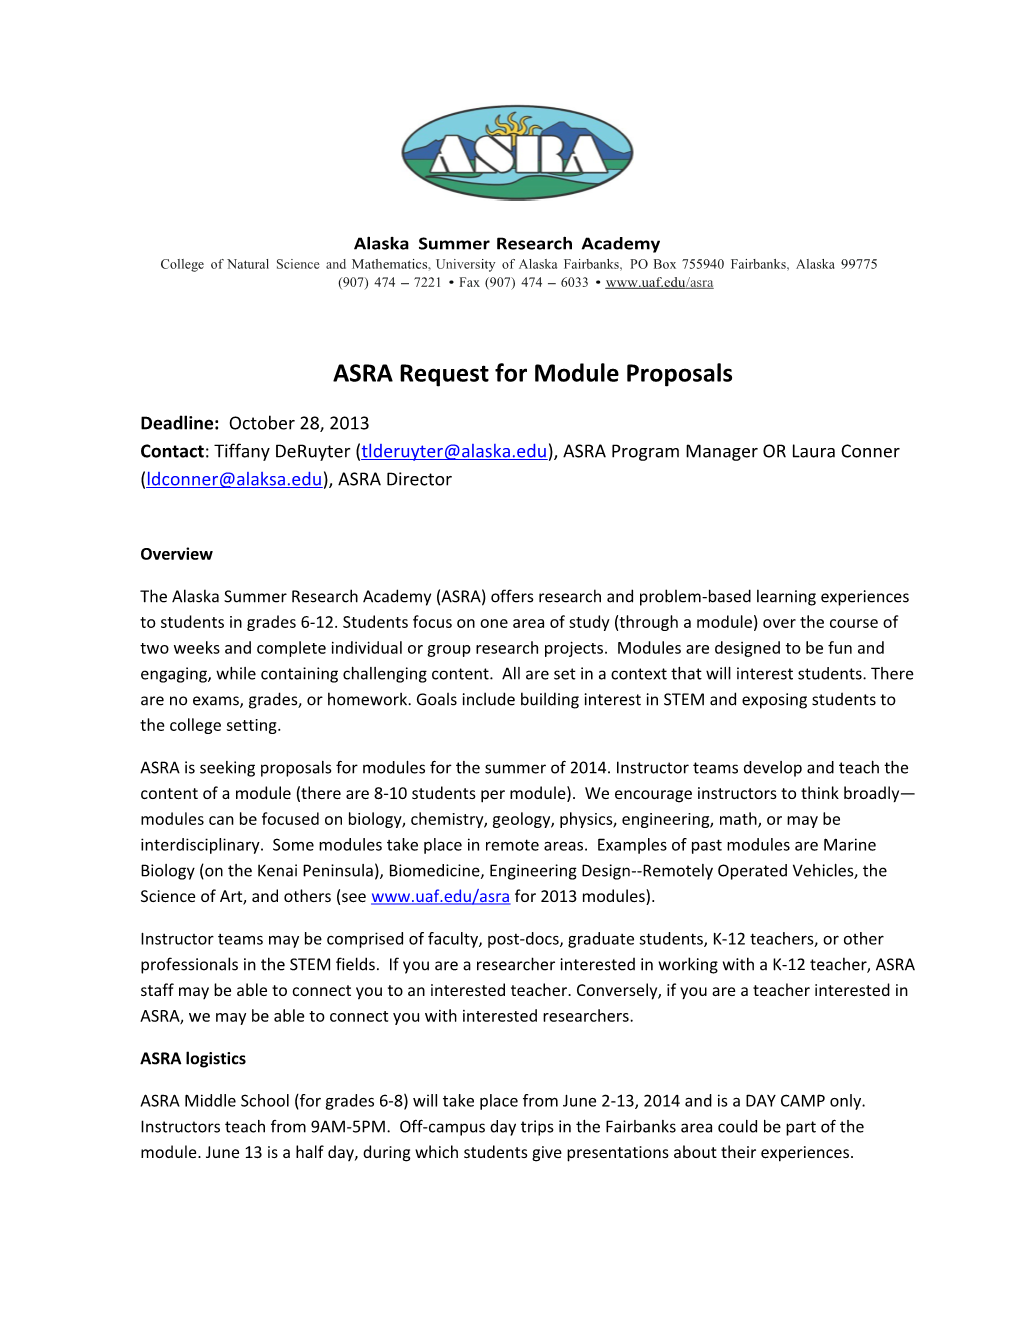 ASRA Request for Module Proposals